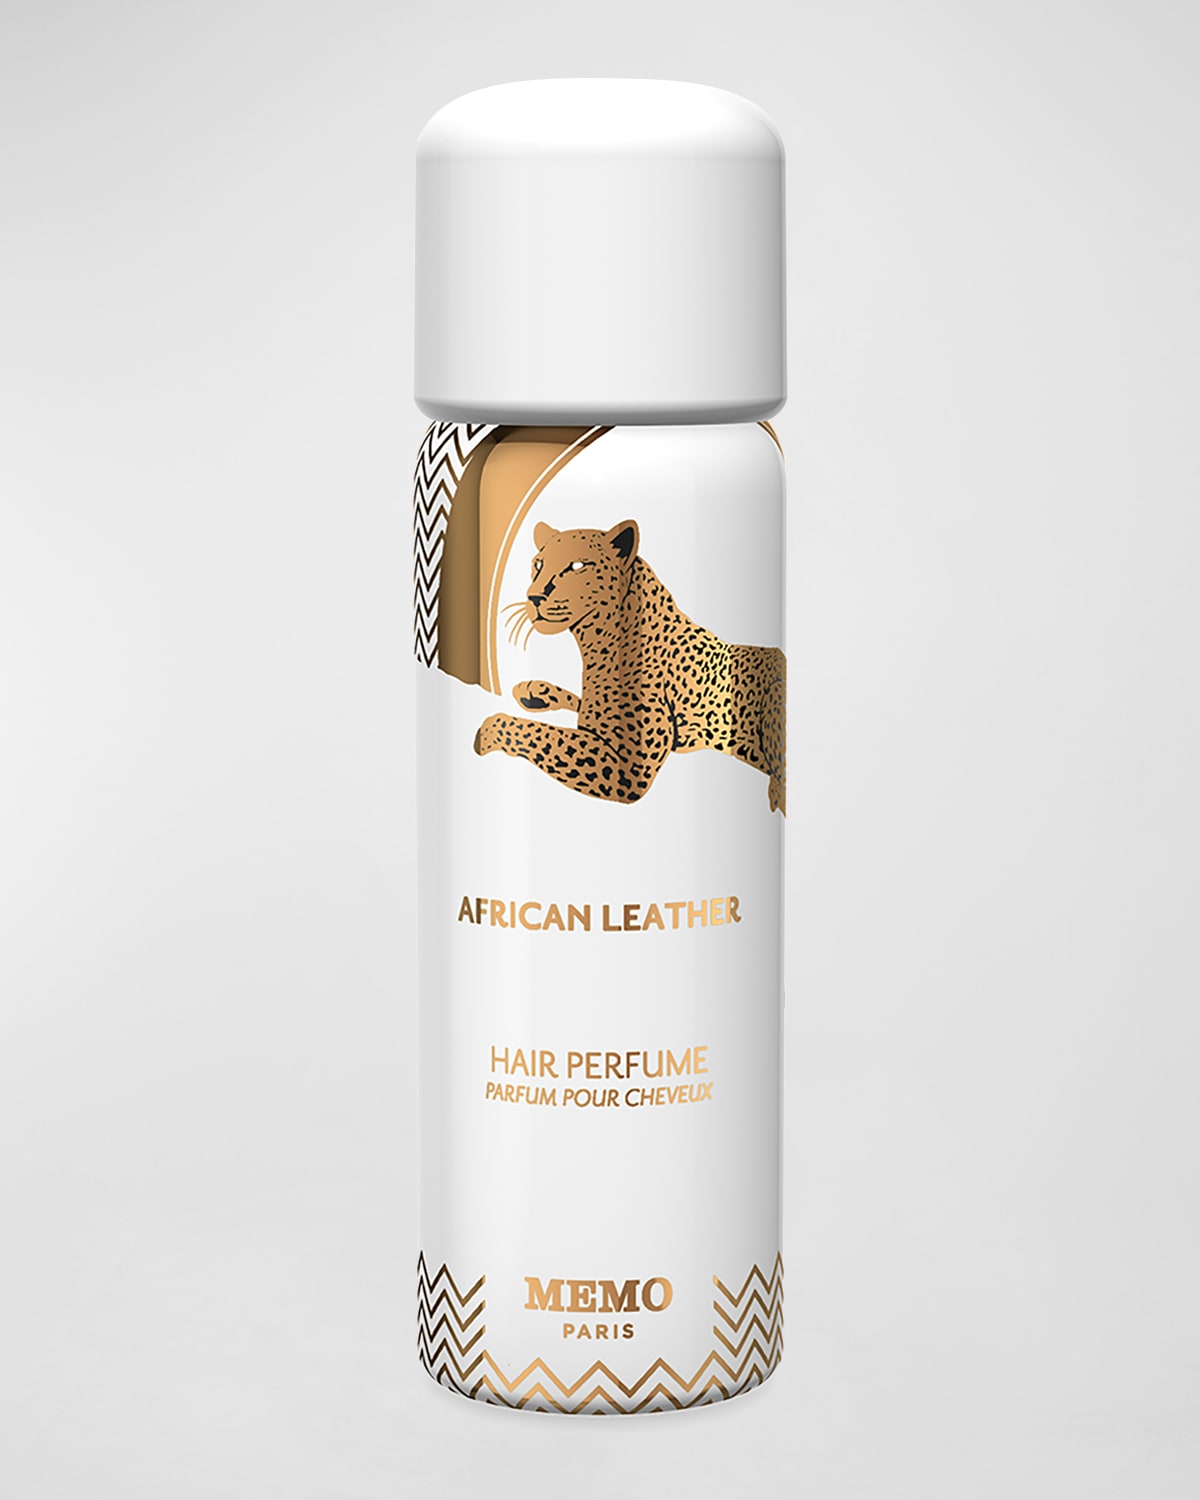 Memo Paris 2.7 oz. African Leather Hair Perfume